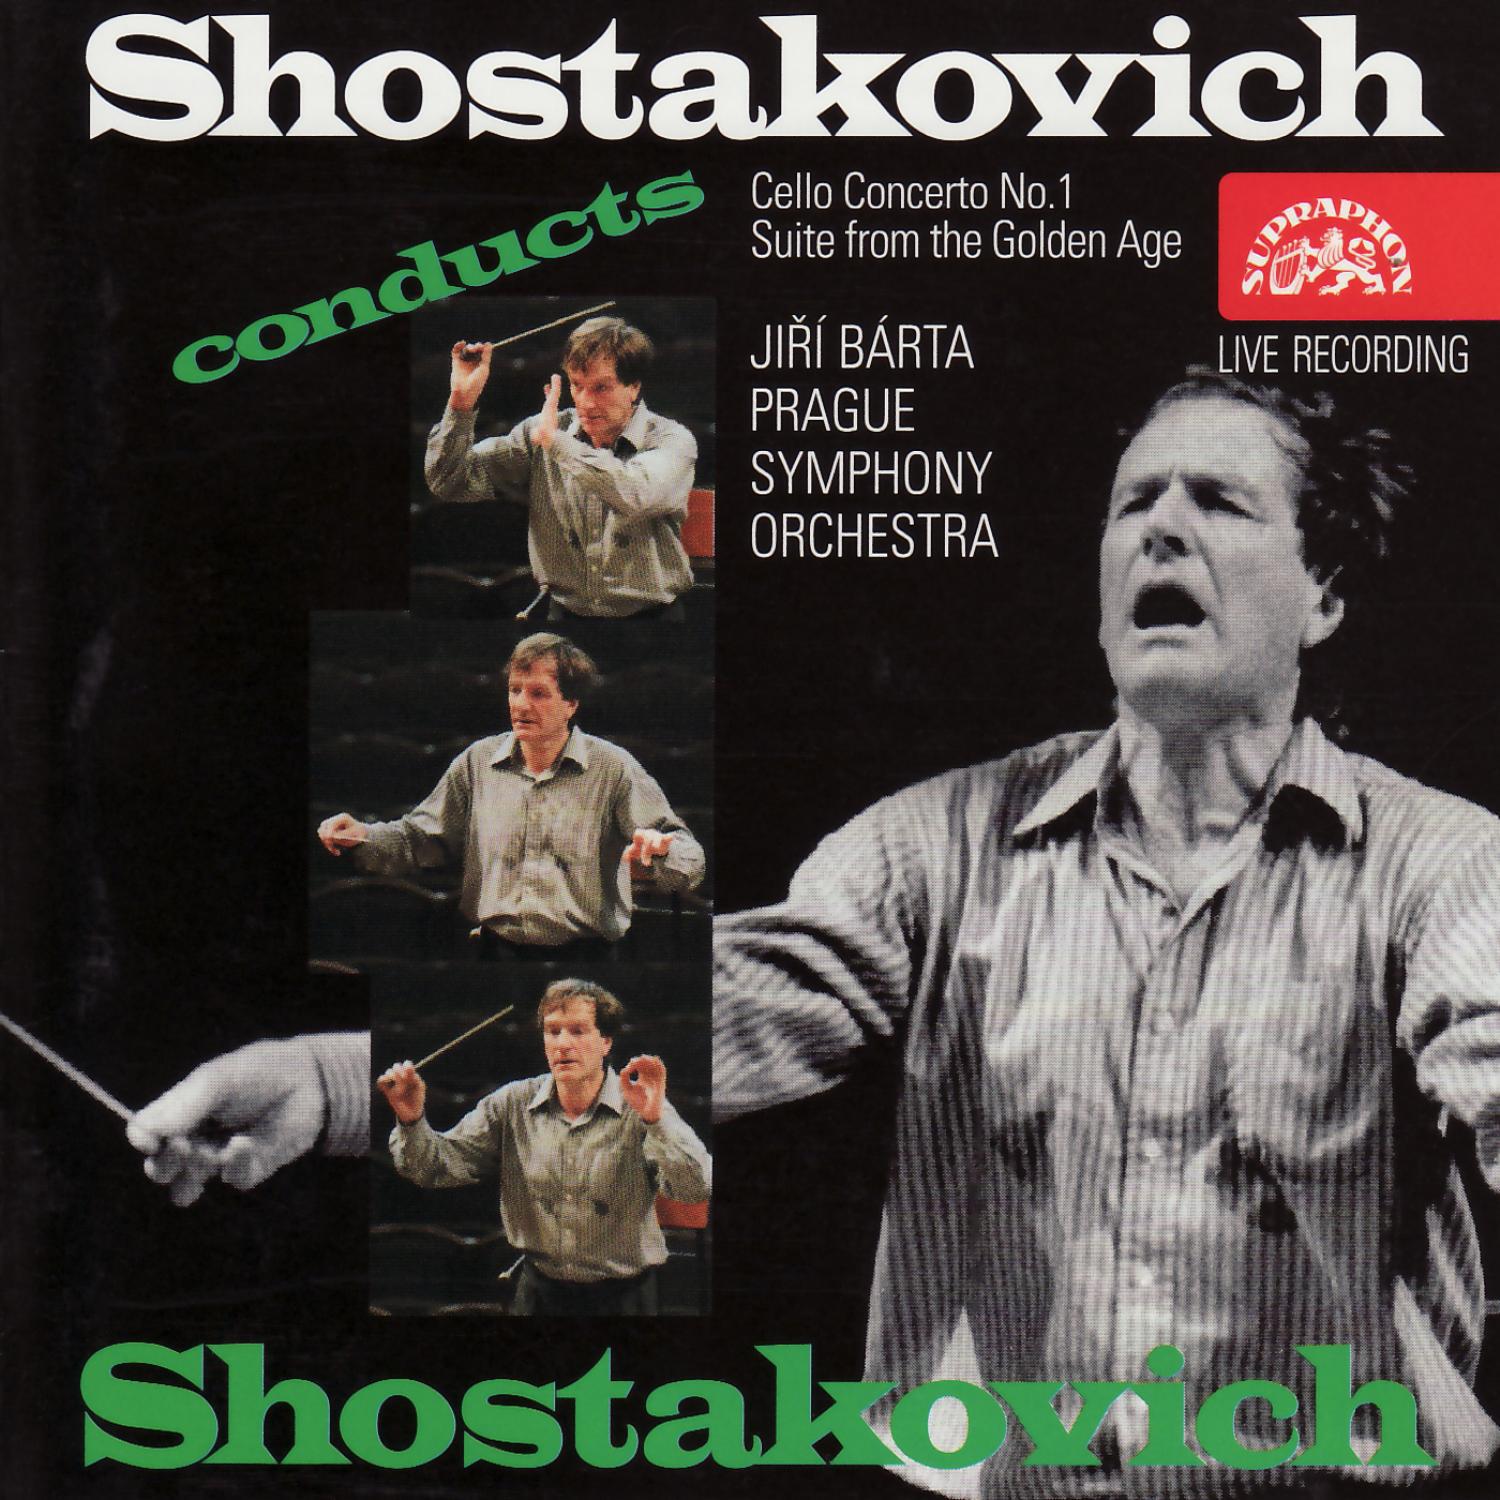 Shostakovich: Concerto No. 1 in E flat Major, The Golden Age